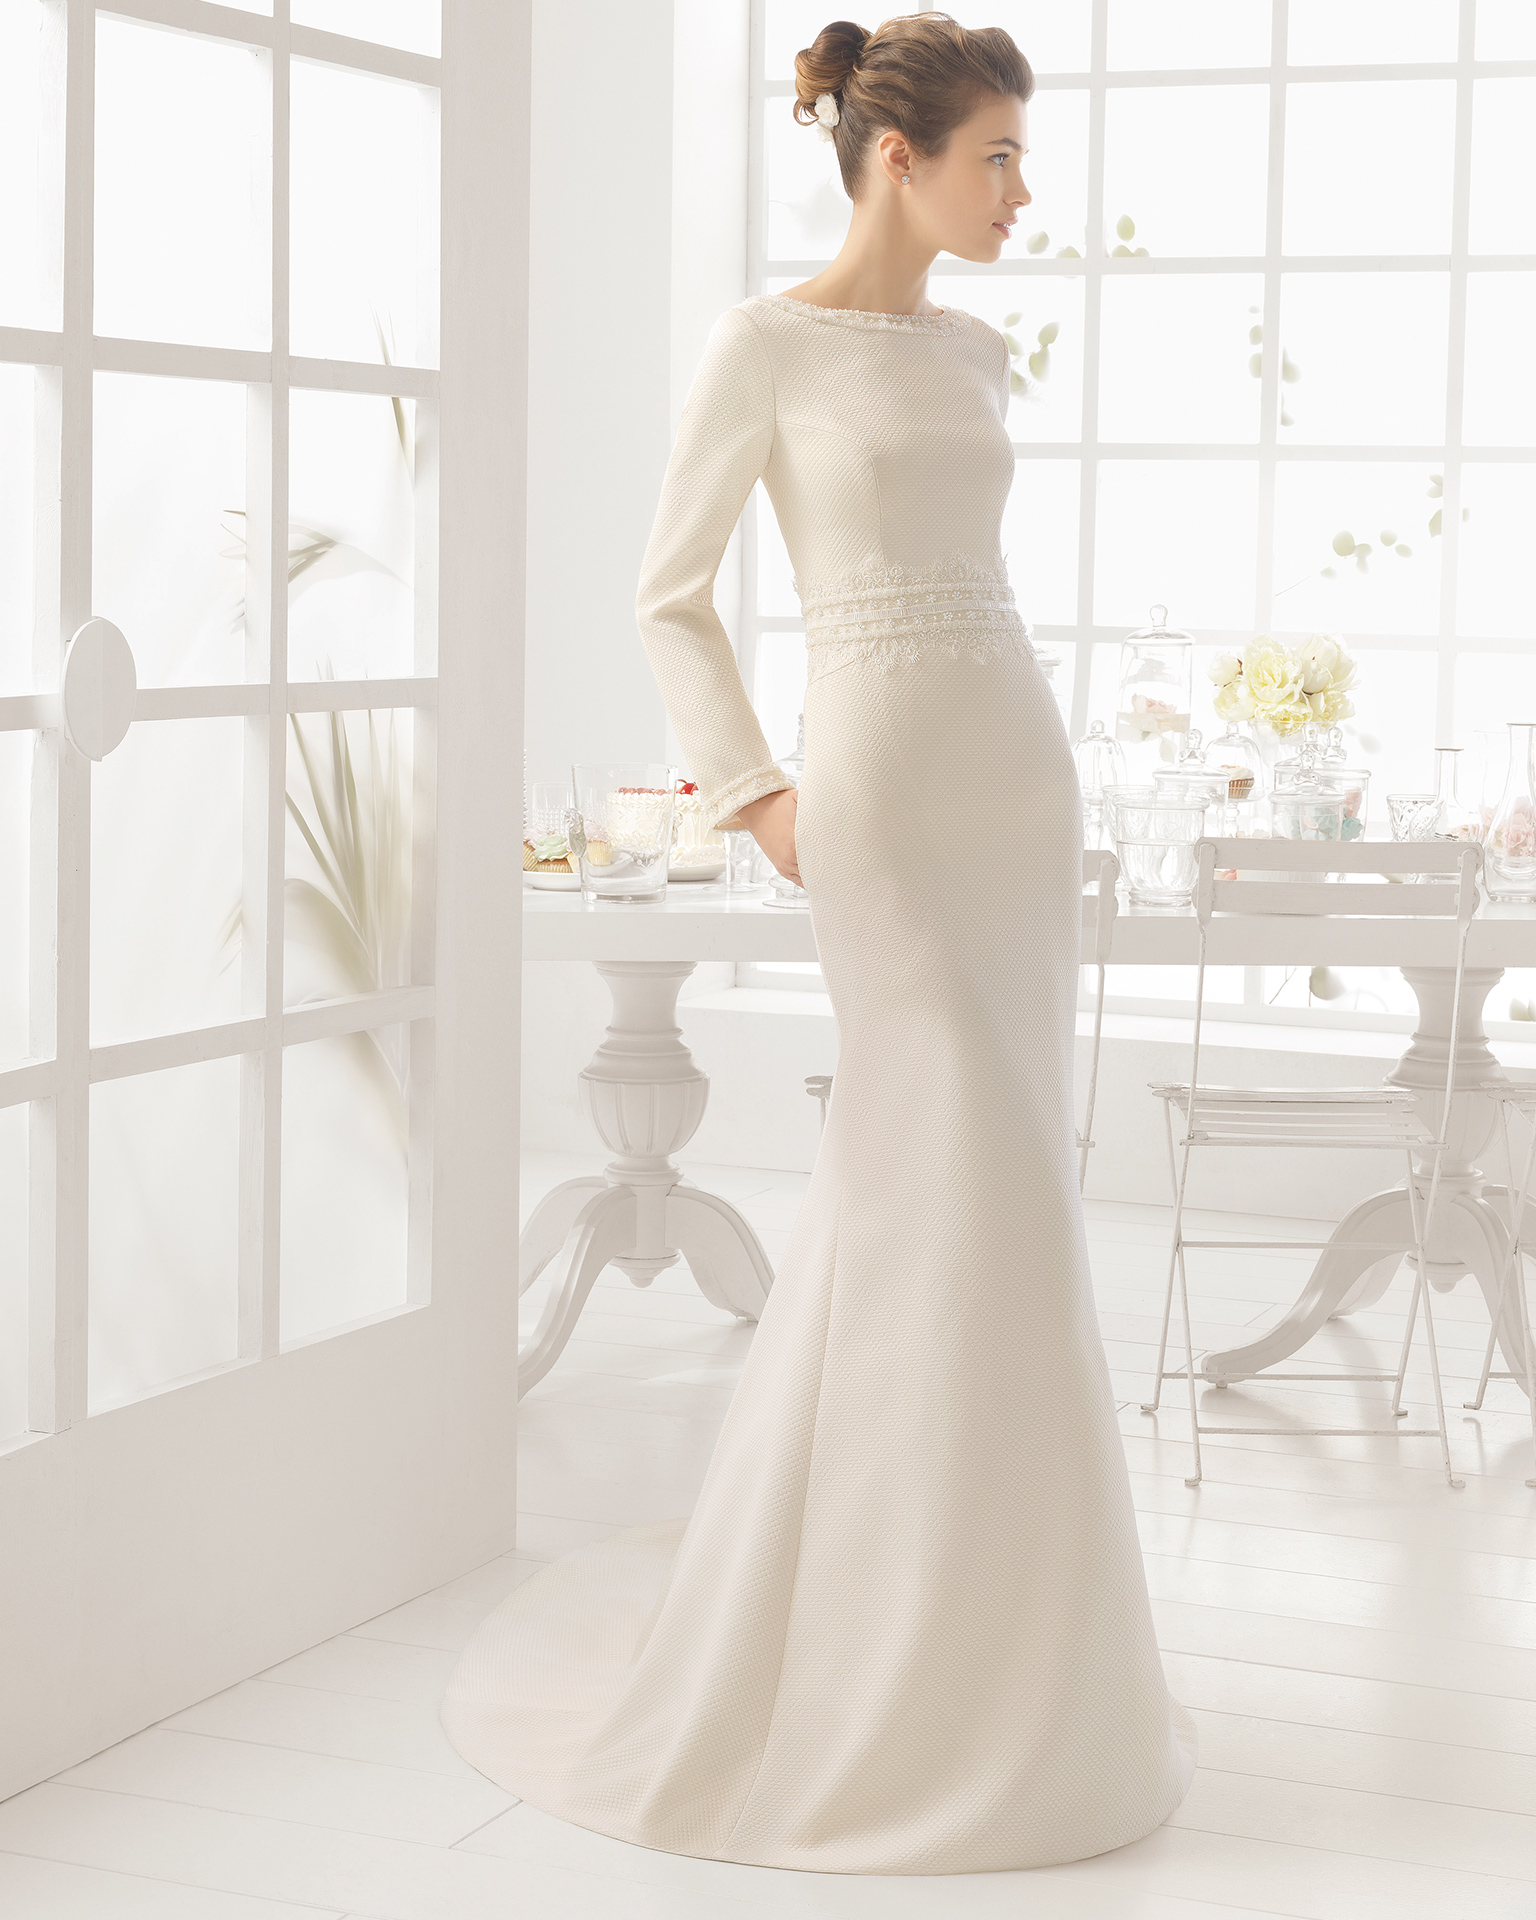 Skøn brudekjole med lange ærmer, dyb ryg og i sin helt egen stil.